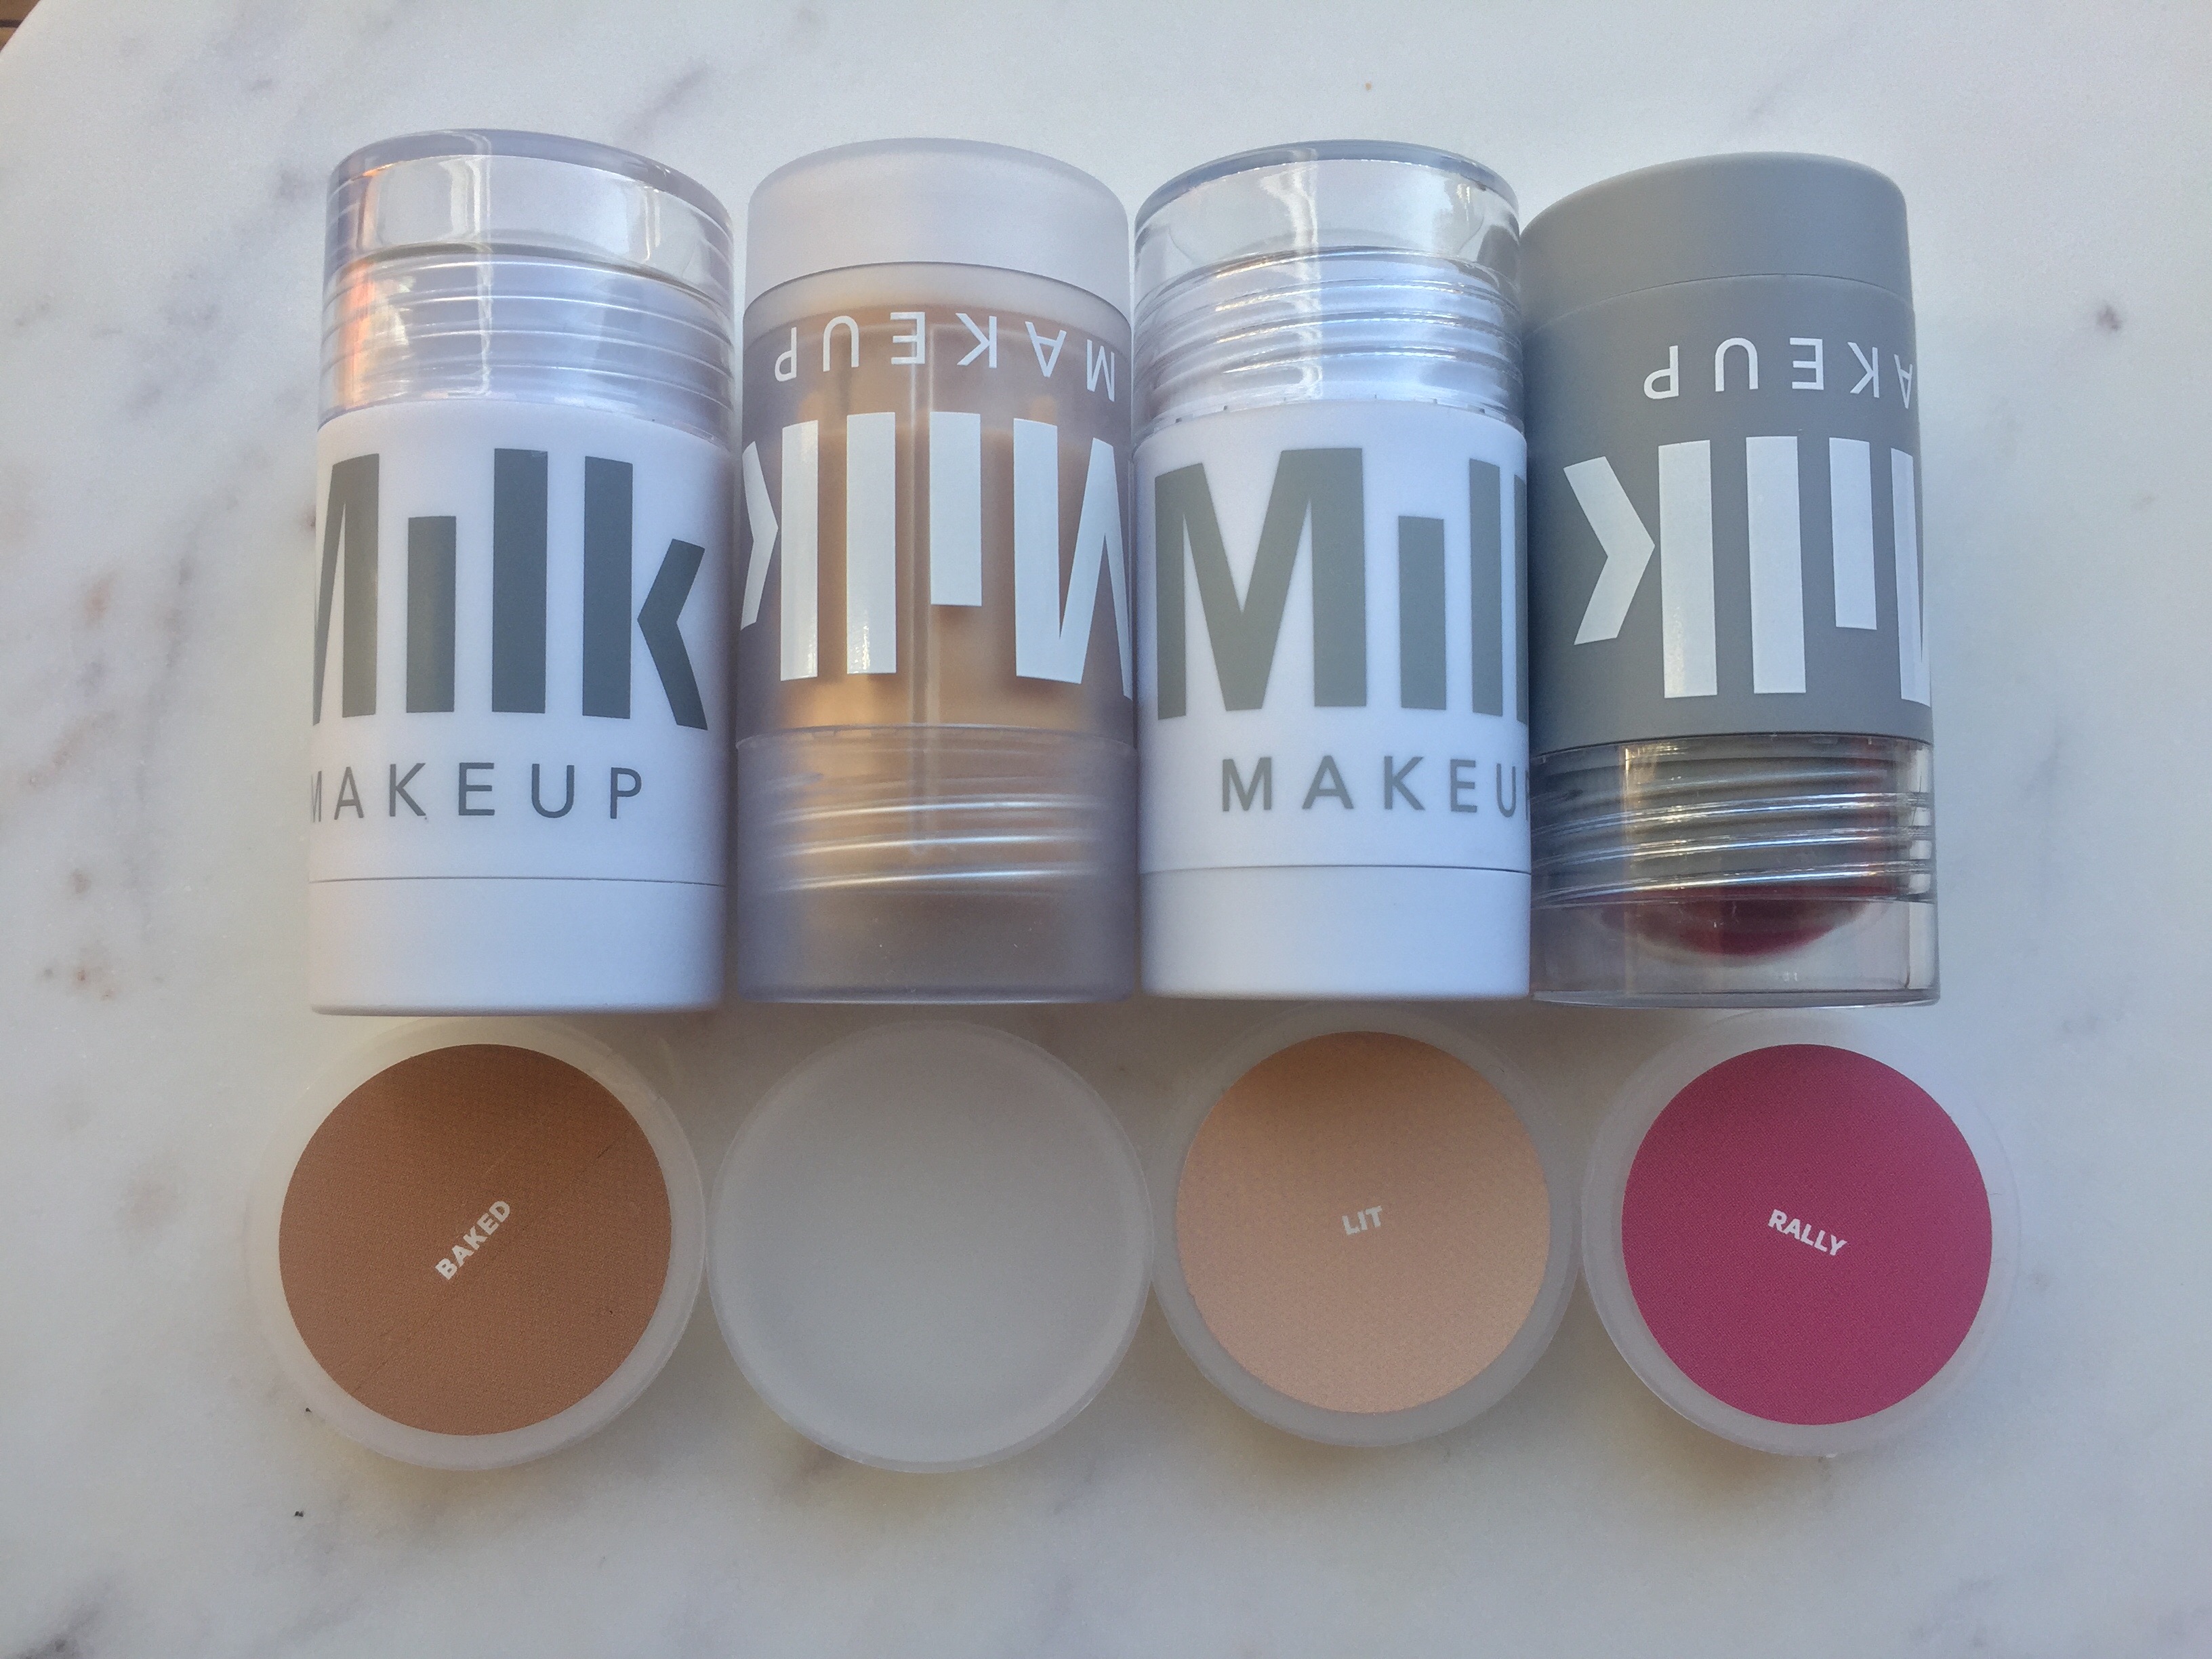 Milk Review: Bronzer, Lip Cheek, Highlighter & Blur Stick - Face Made Up - Beauty Product Reviews, Makeup Tutorial Videos Lifestyle